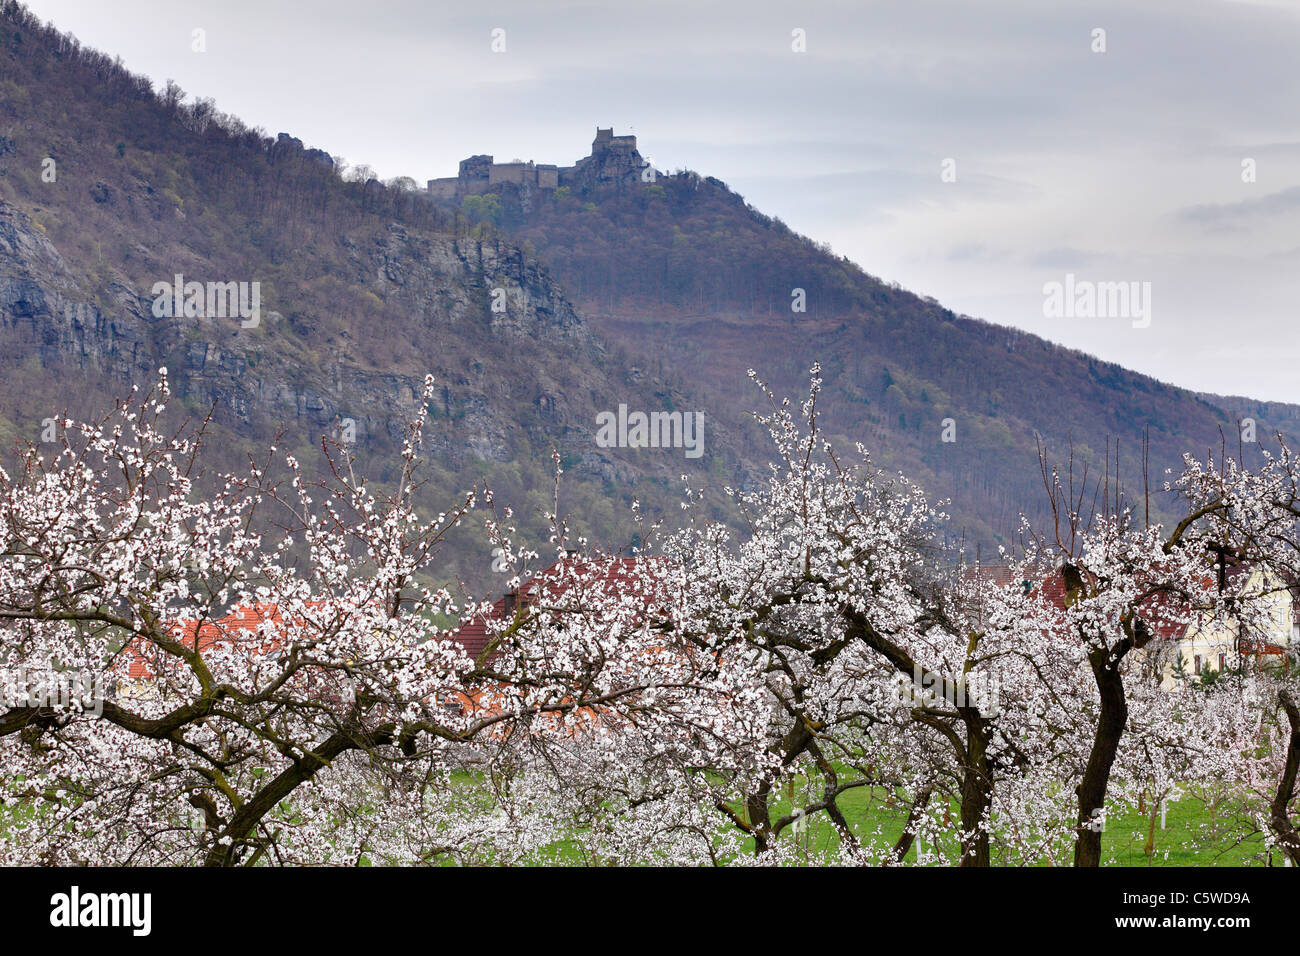 Austria Austria Inferior Wachau,, vista de la ruina del castillo Aggstein con flores de albaricoque en primer plano Foto de stock